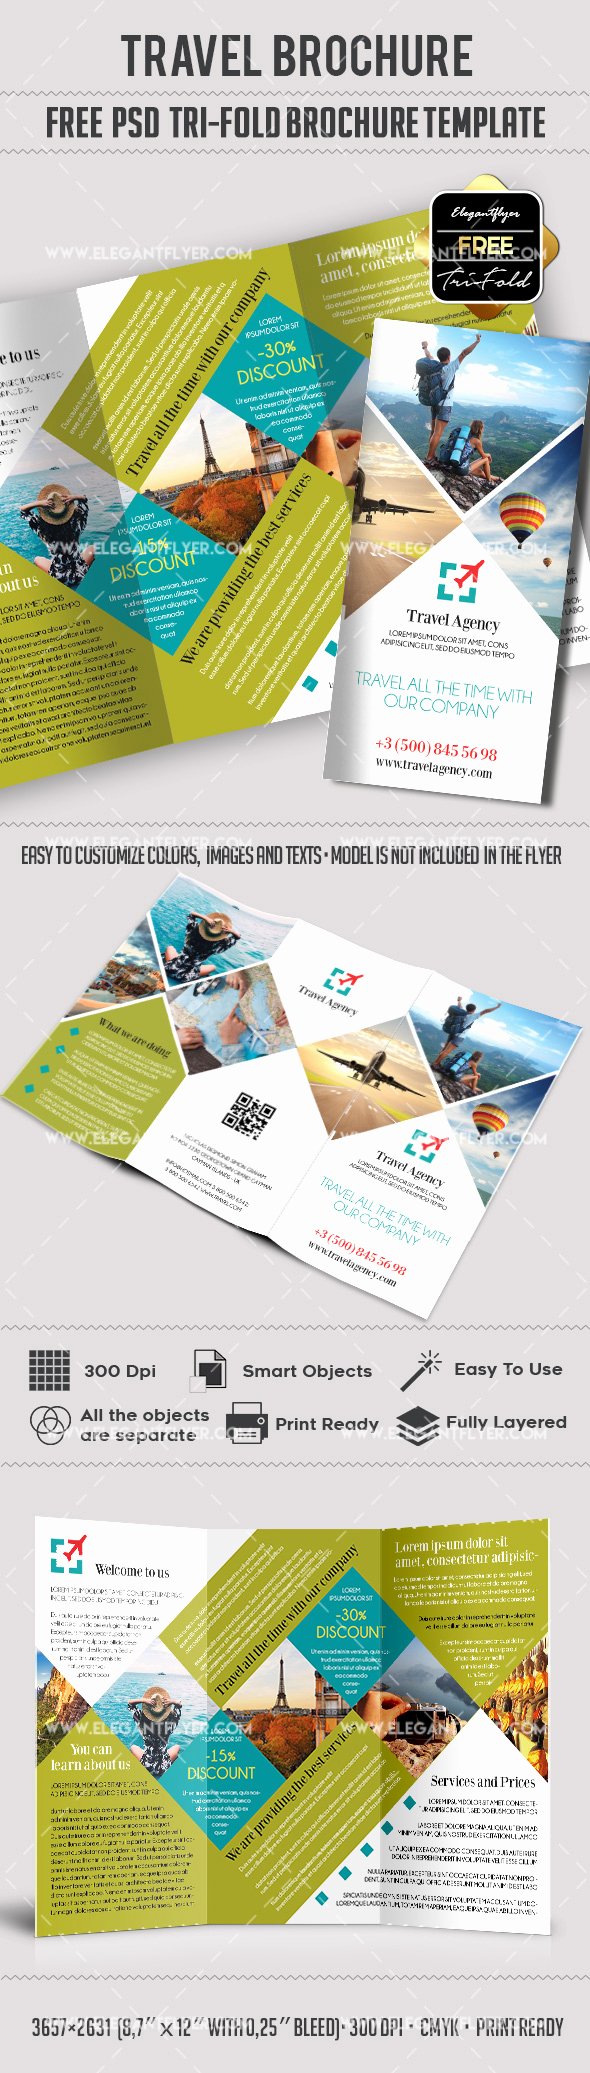 Travel – Free Psd Tri Fold Psd Brochure Template – by